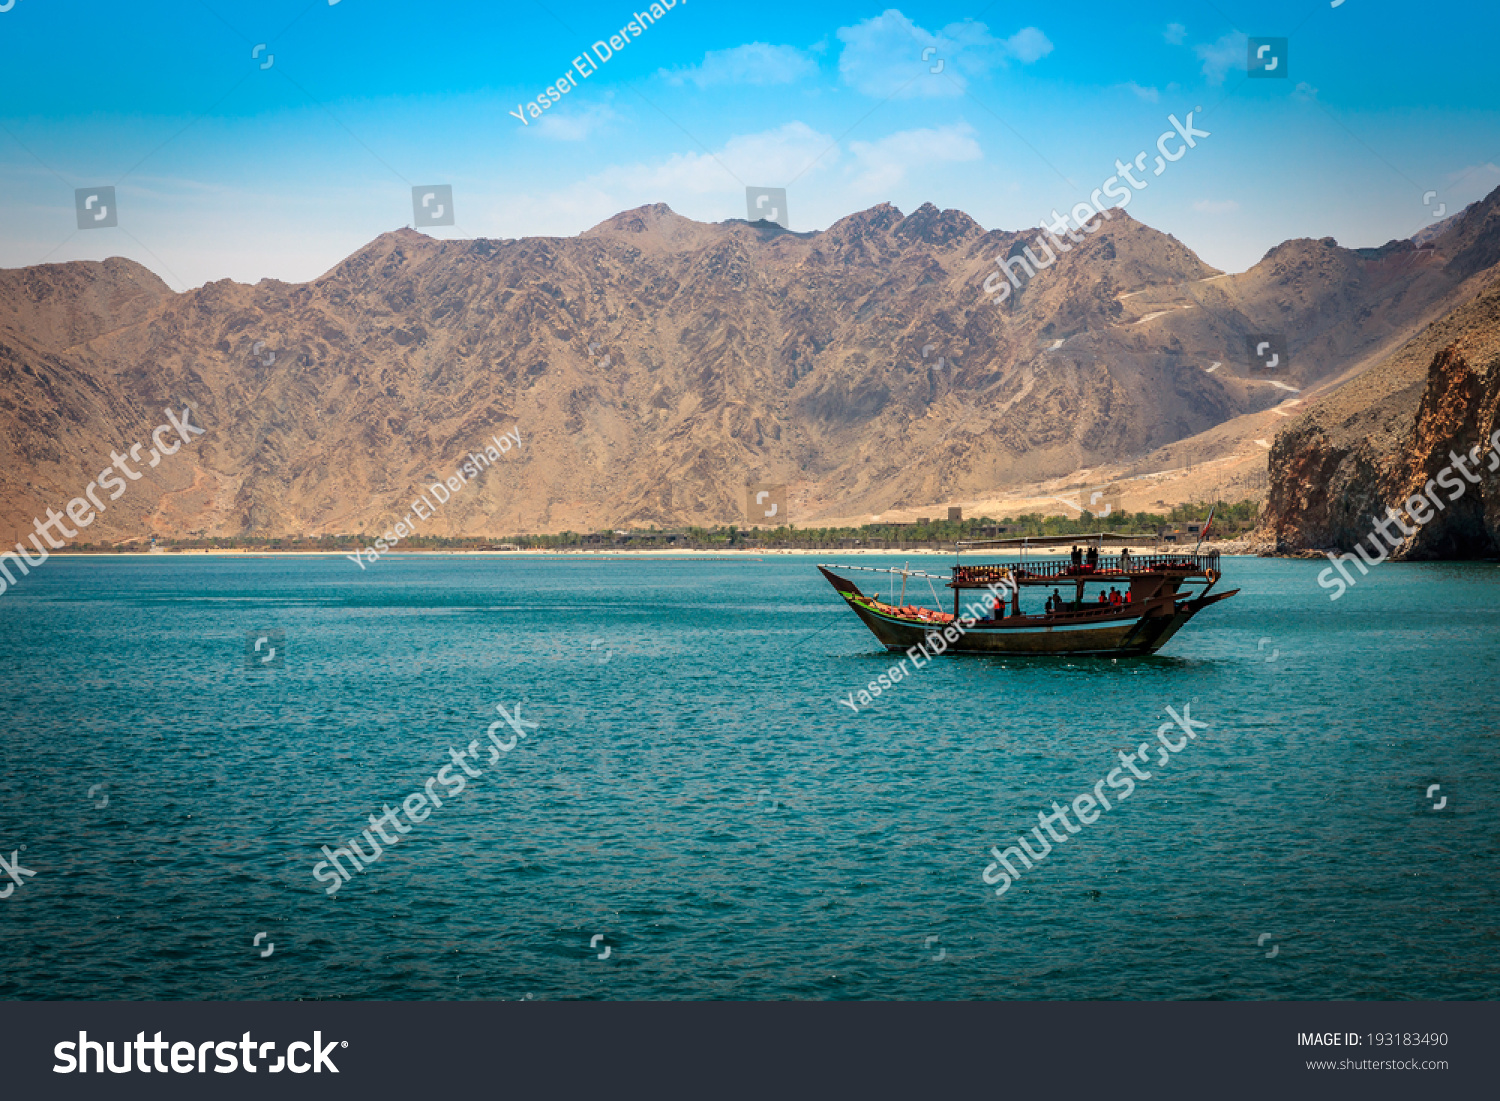 Indian Ocean, mountains, boats, skyline, horizon #193183490